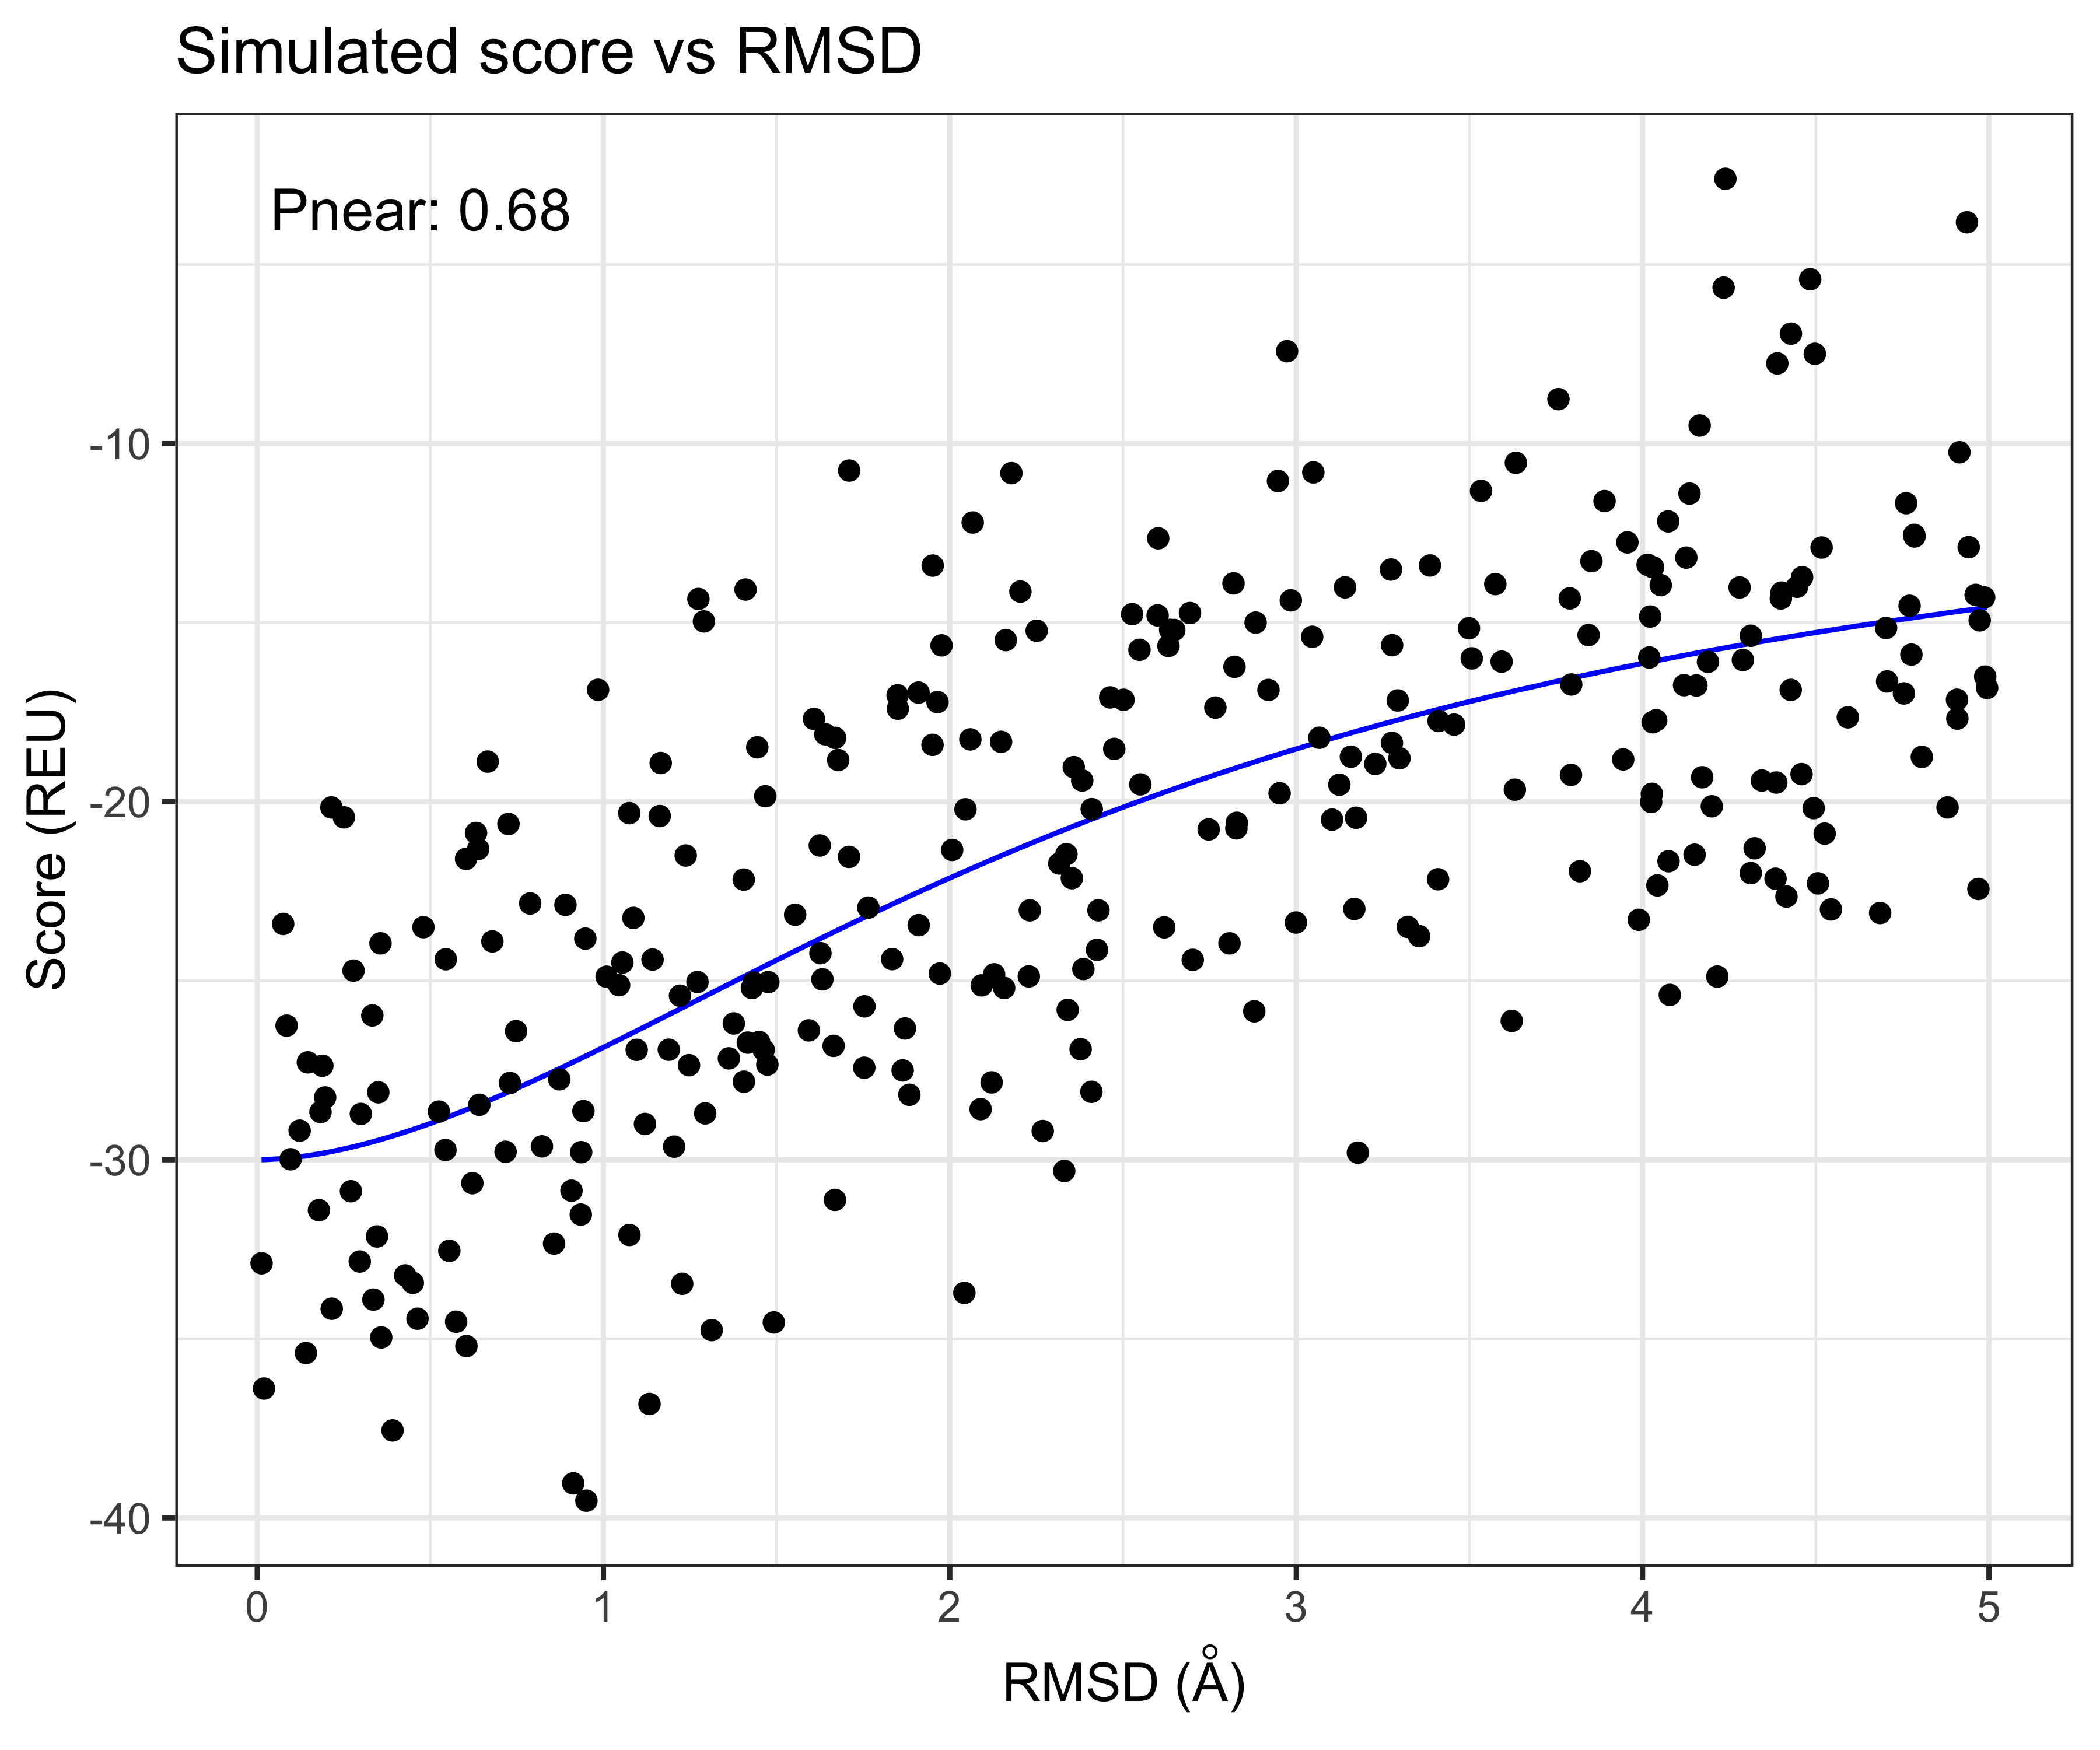 plot of chunk simulate-score-vs-rmsd-data